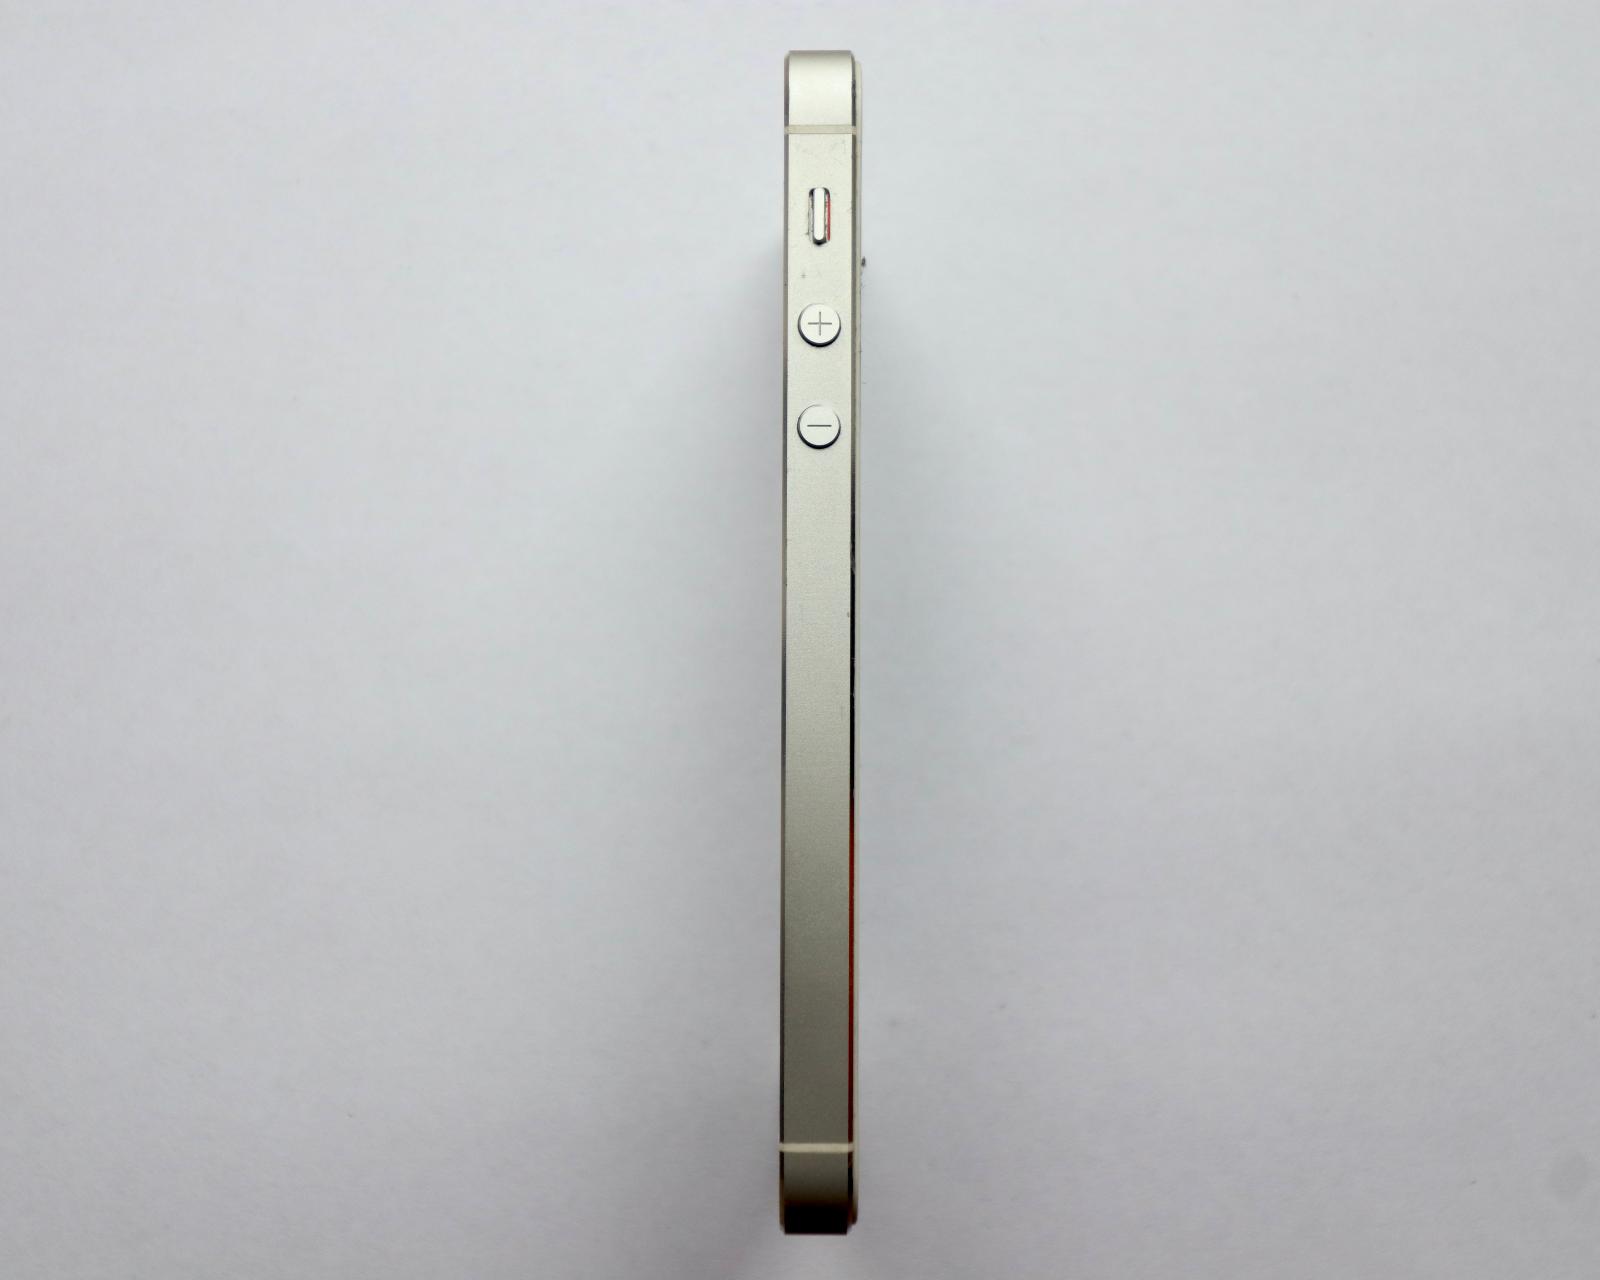 iPhone 5s - Mobily a chytrá elektronika